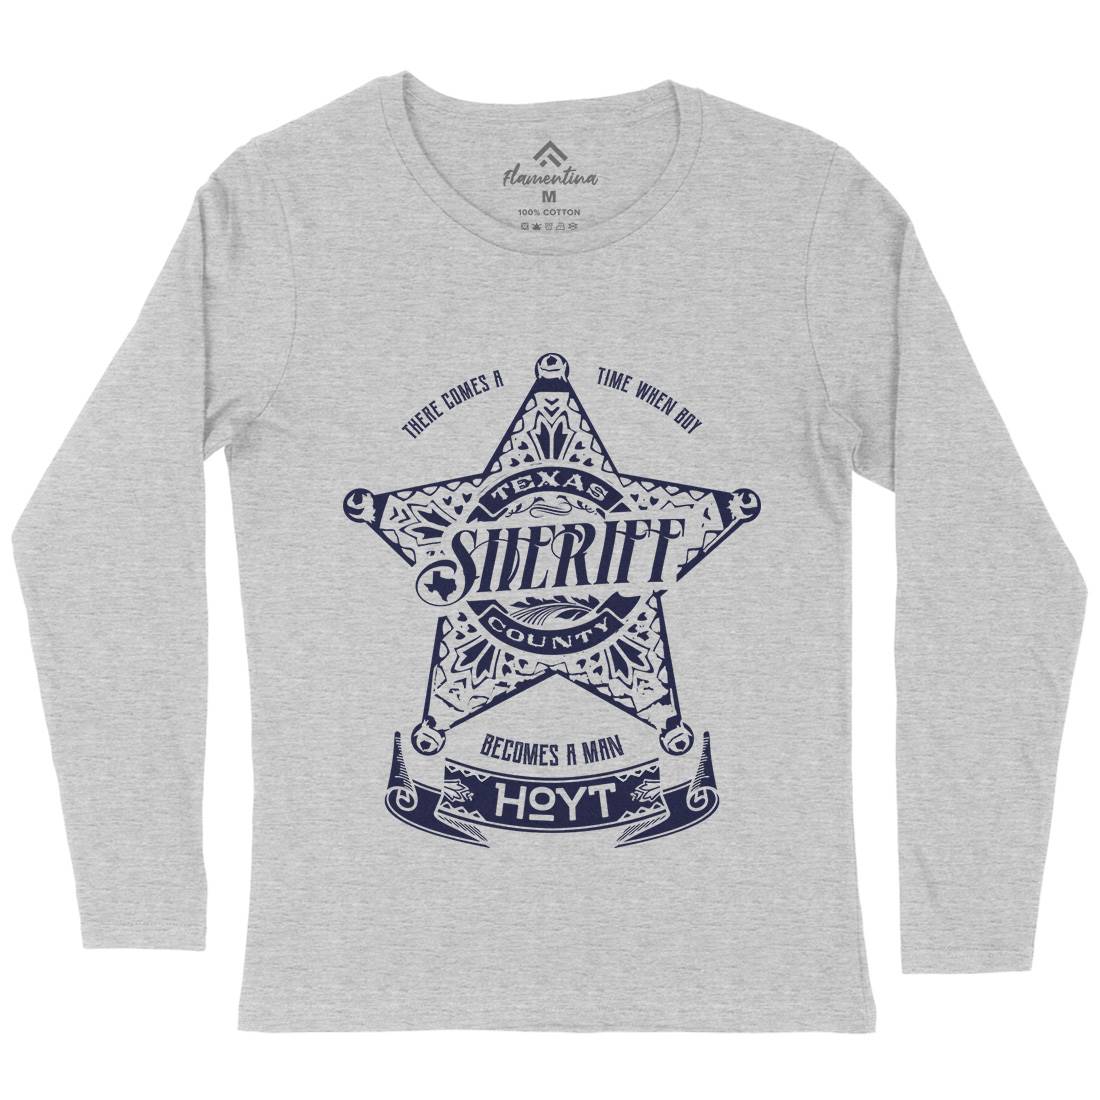 Sheriff Hoyt Womens Long Sleeve T-Shirt Retro D421